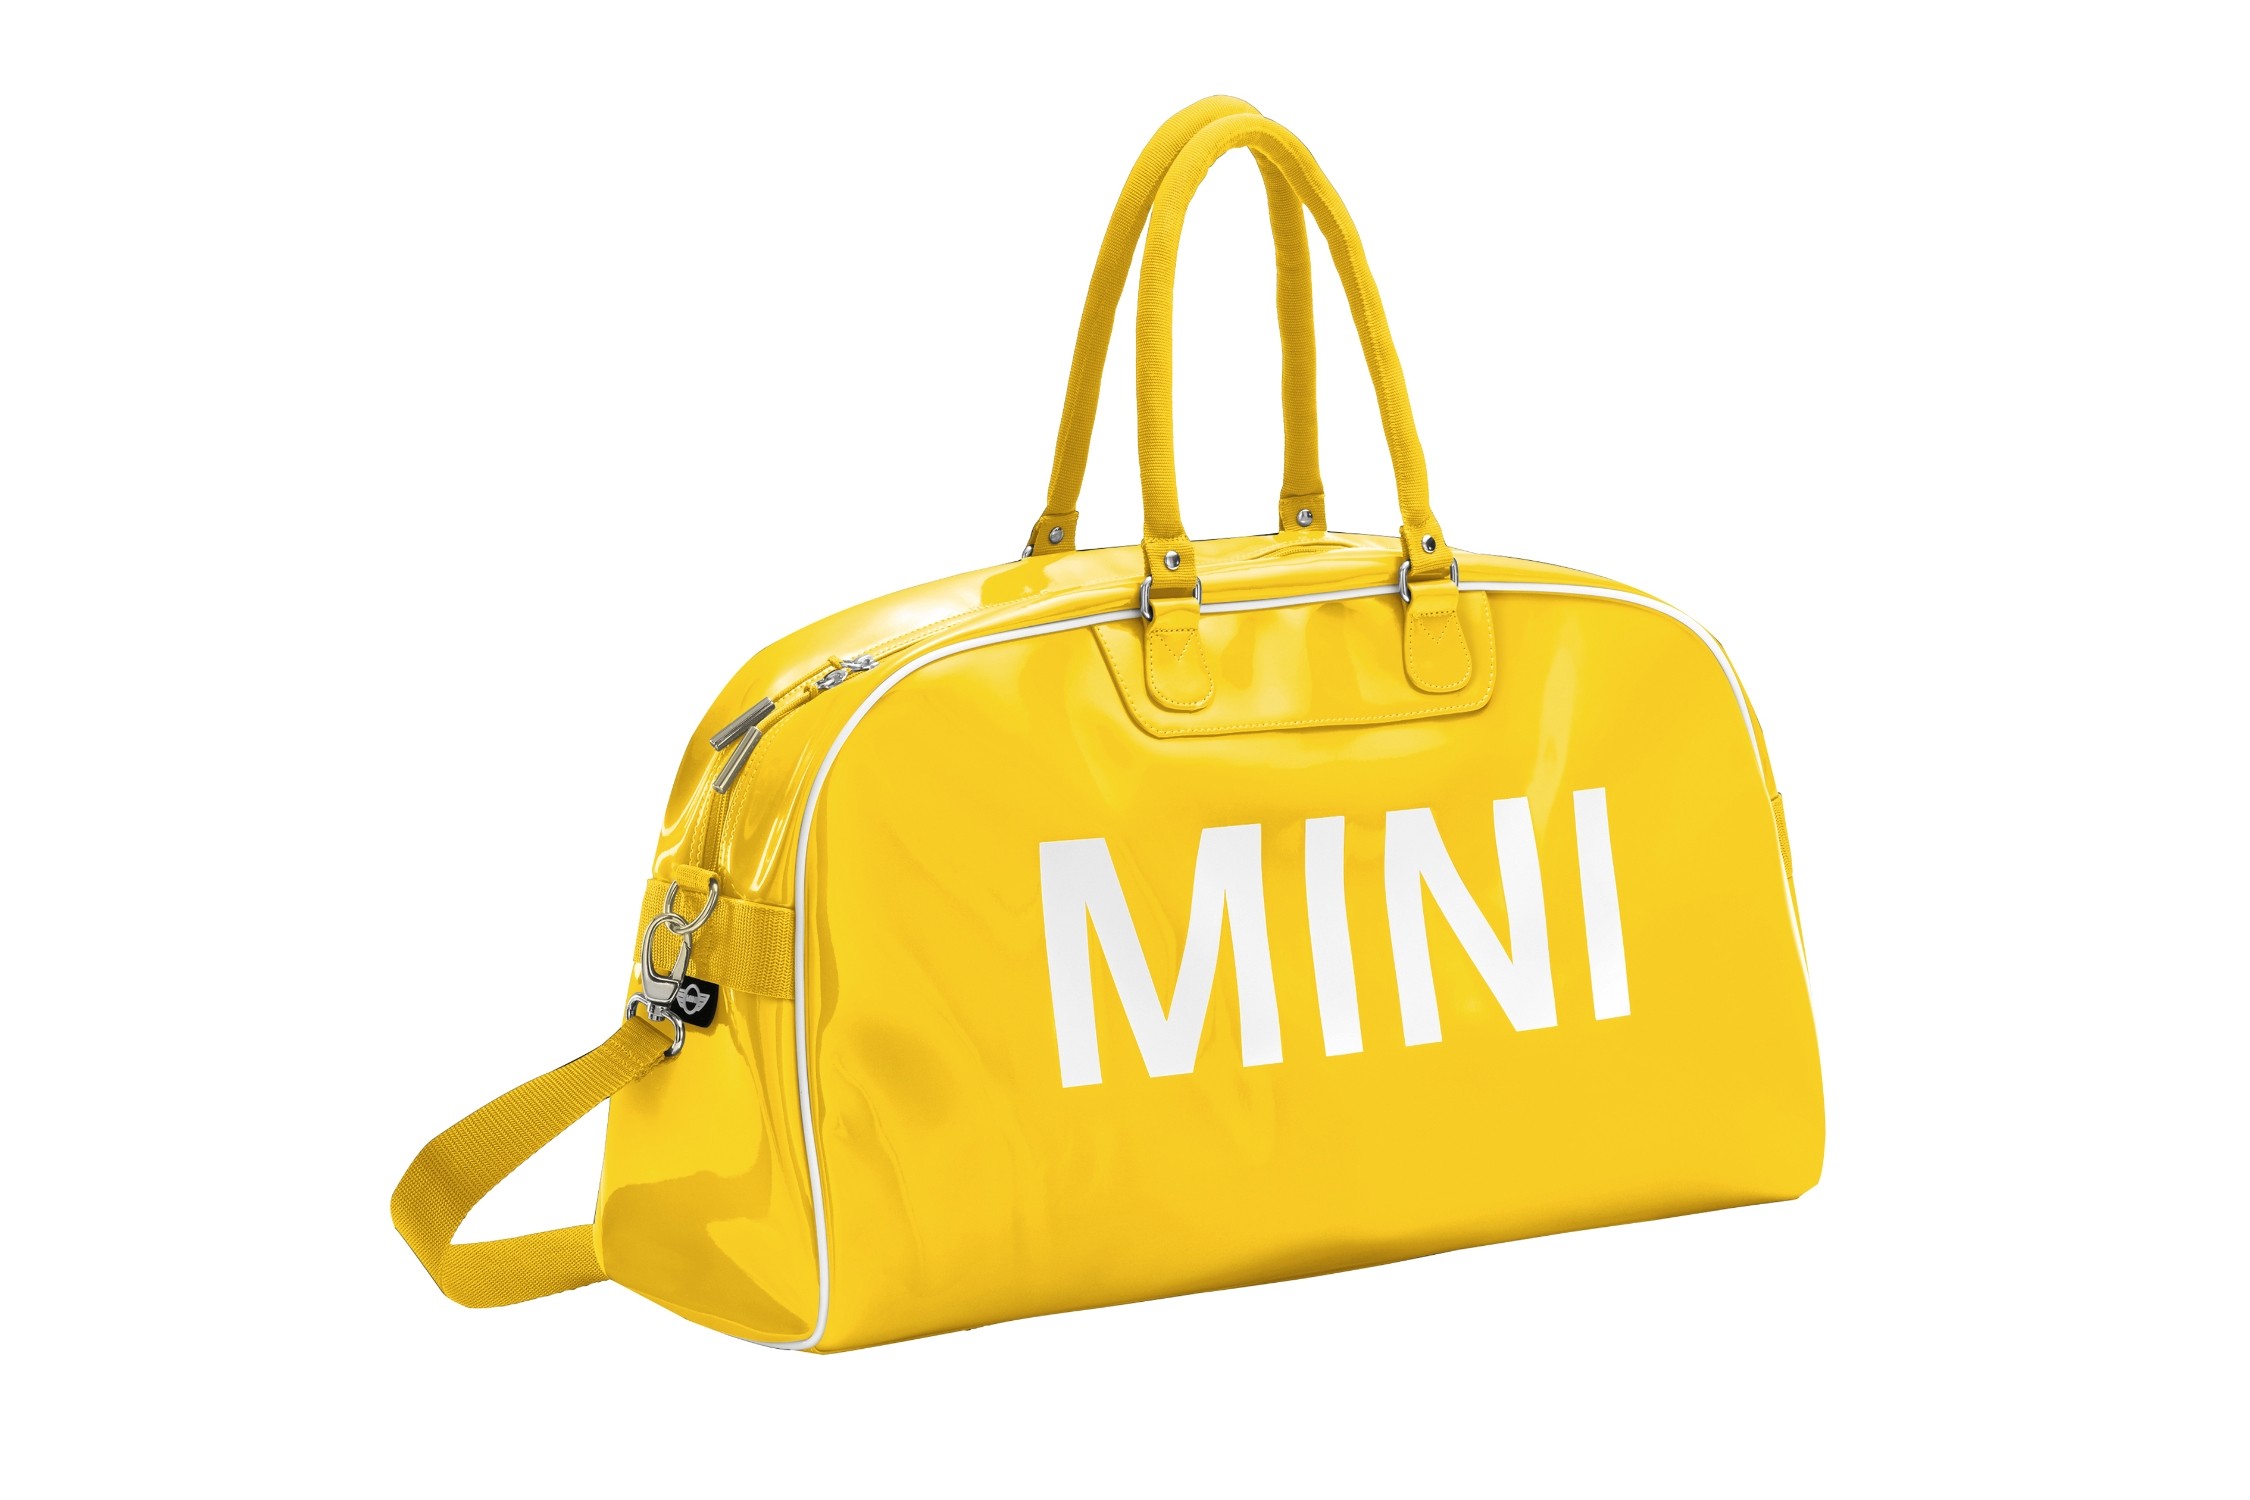 MINI Duffle Bag Yellow (10/2014)